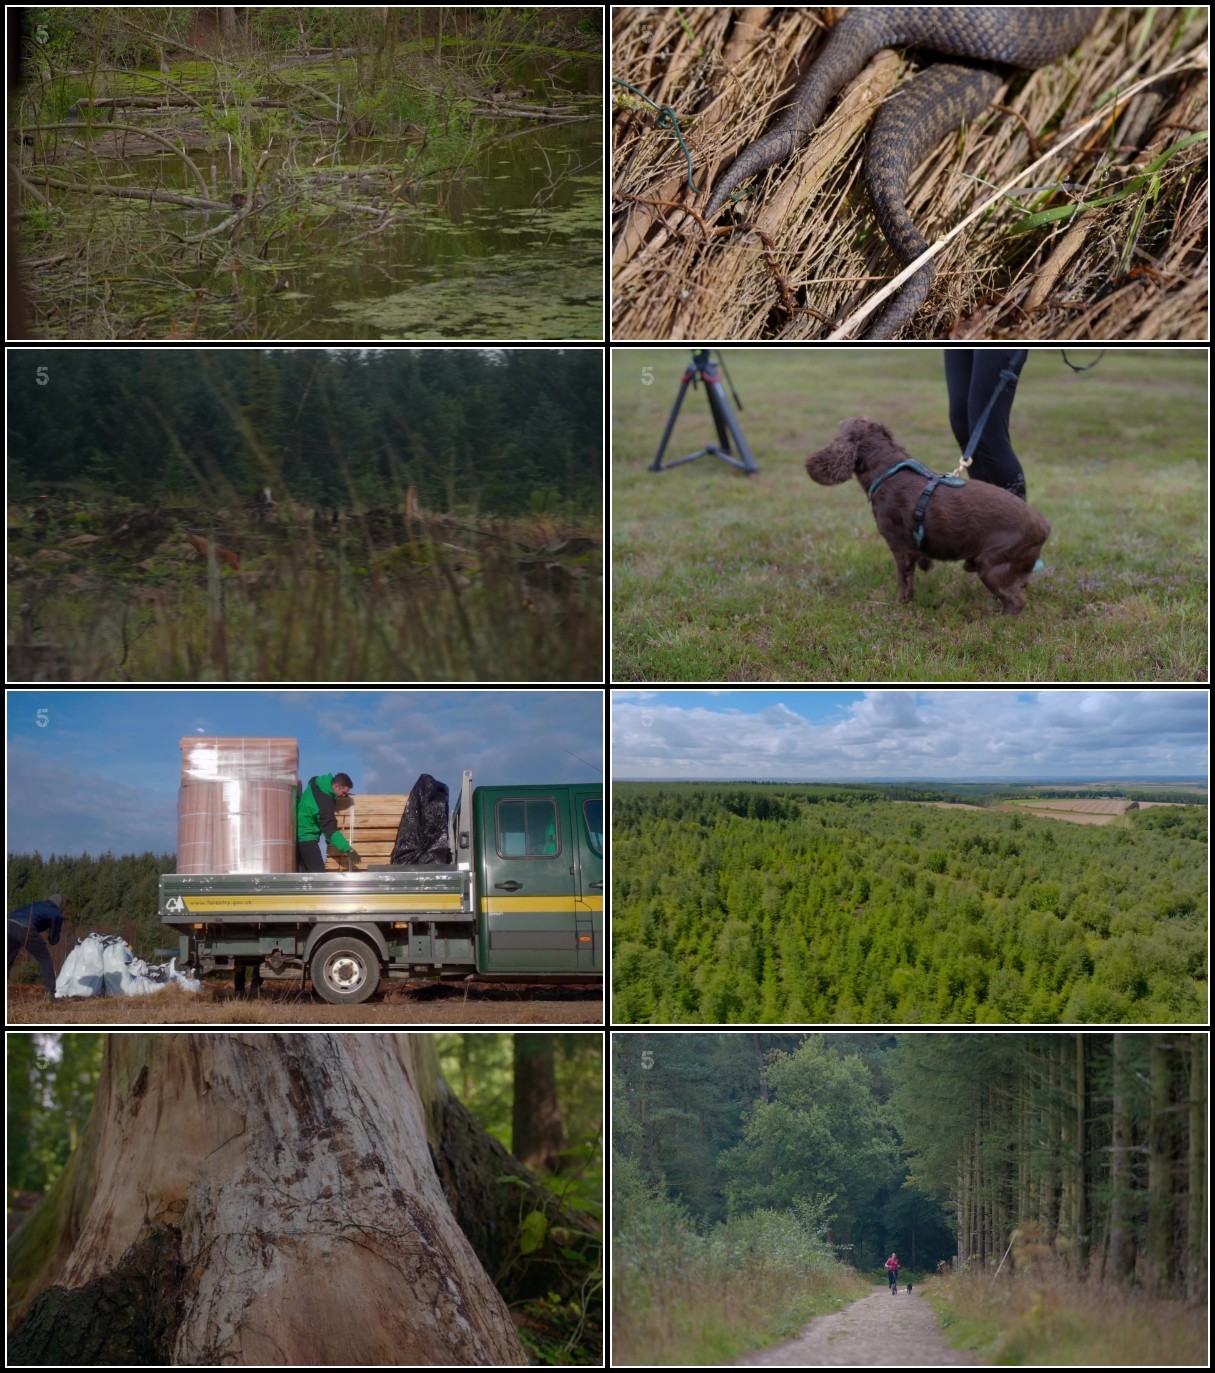 Secret Life of The Forest S02E08 1080p HDTV H264-DARKFLiX